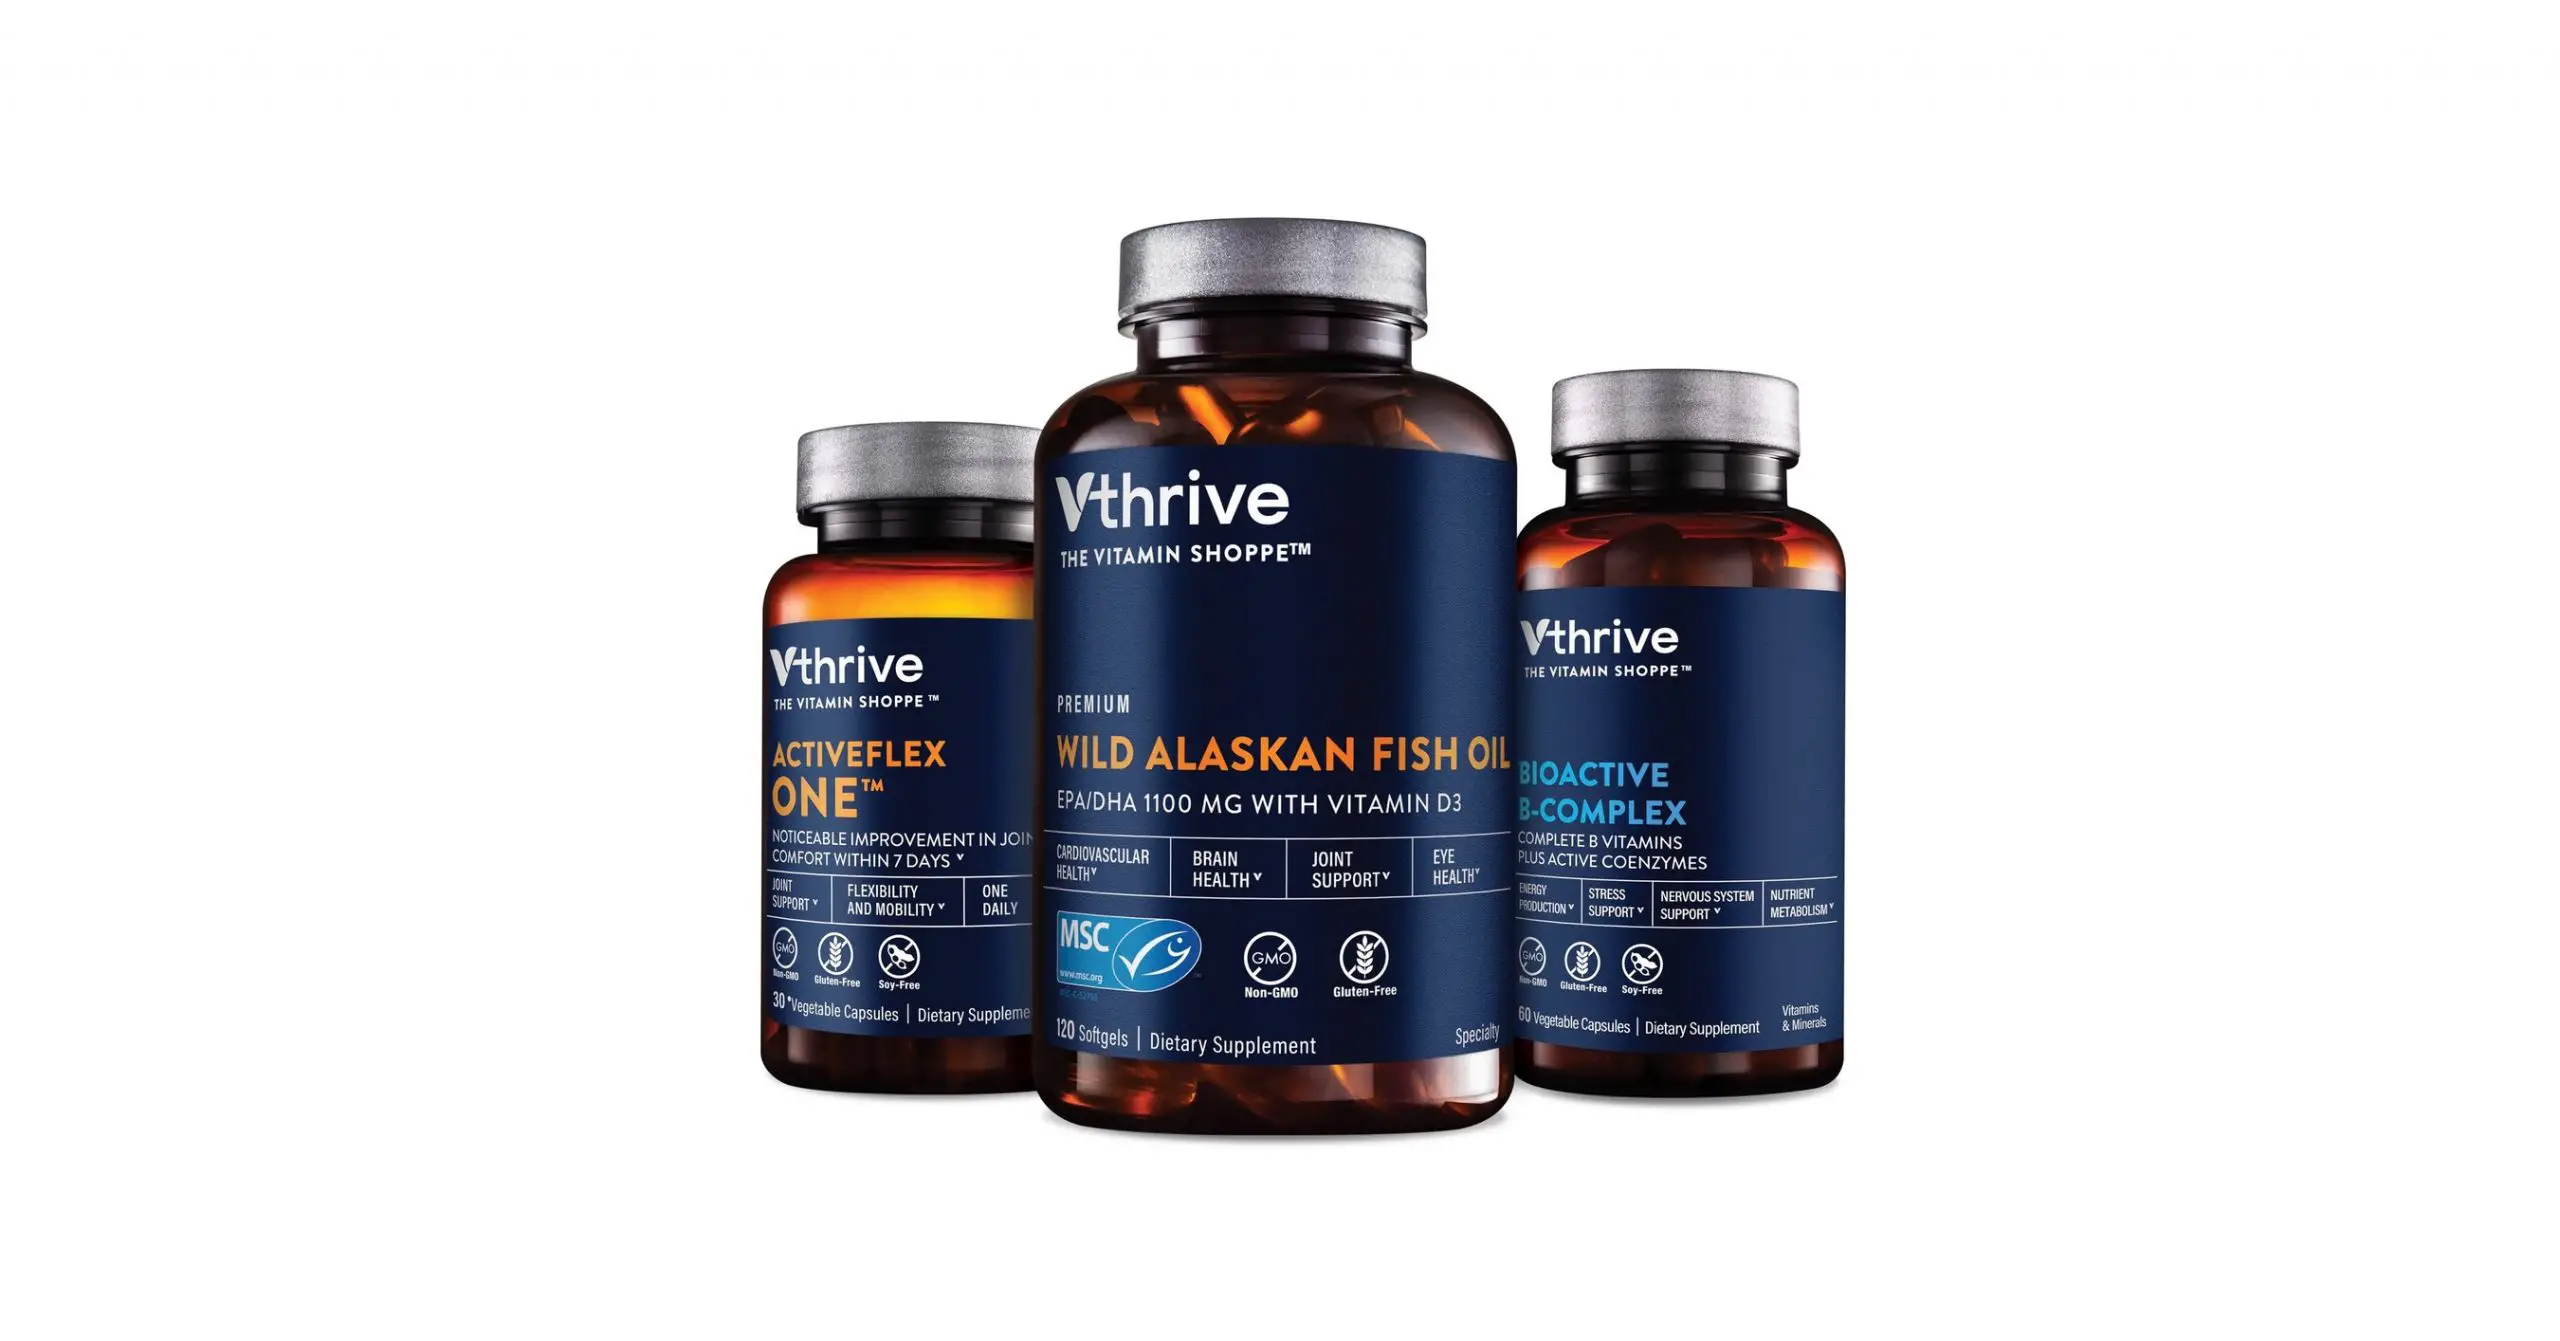 The Vitamin Shoppe® Launches New Vthrive The Vitamin Shoppe Brand Line ...